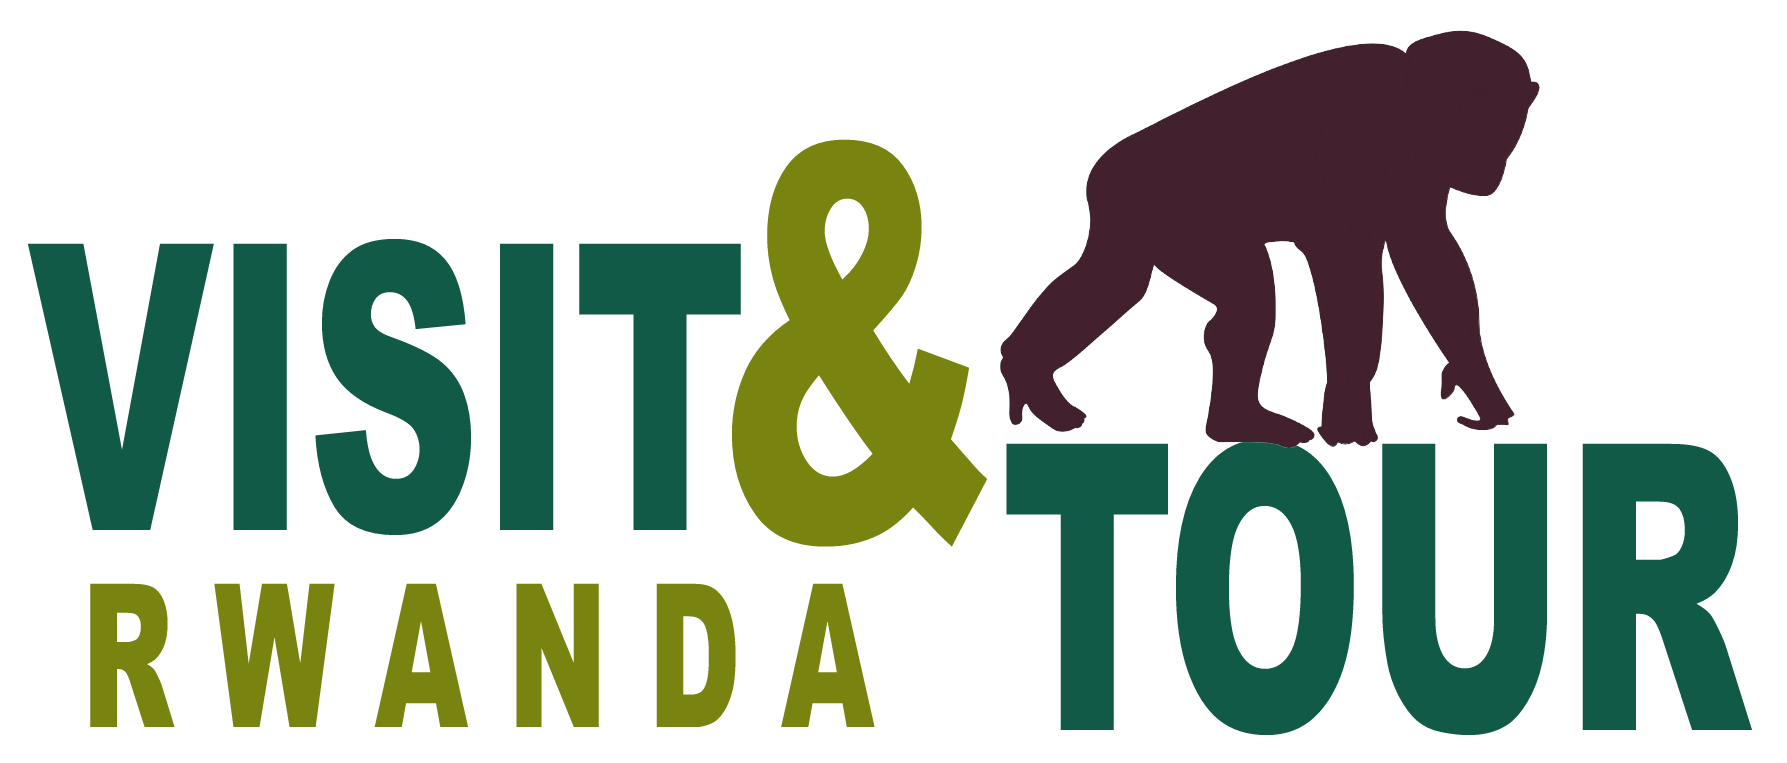 Visit and Tour Rwanda